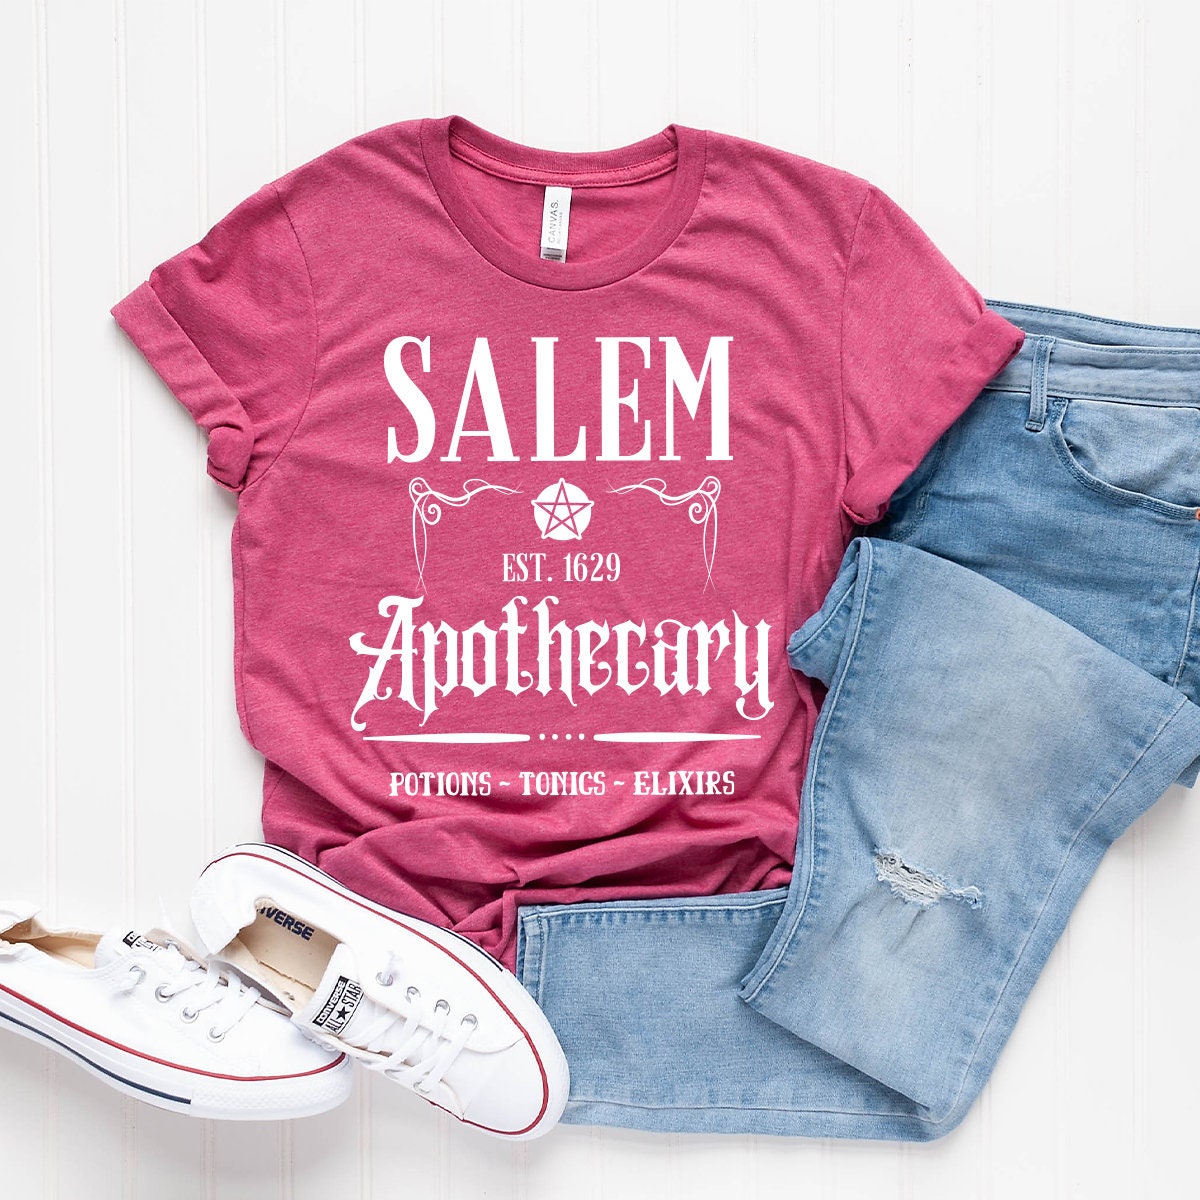 Salem Apothecary Shirt, Funny Halloween Shirt, Fall Tshirt, Halloween Gift, Hocu Pocu Shirt, Witch Sisters Shirt, Witch Clothing - Fastdeliverytees.com